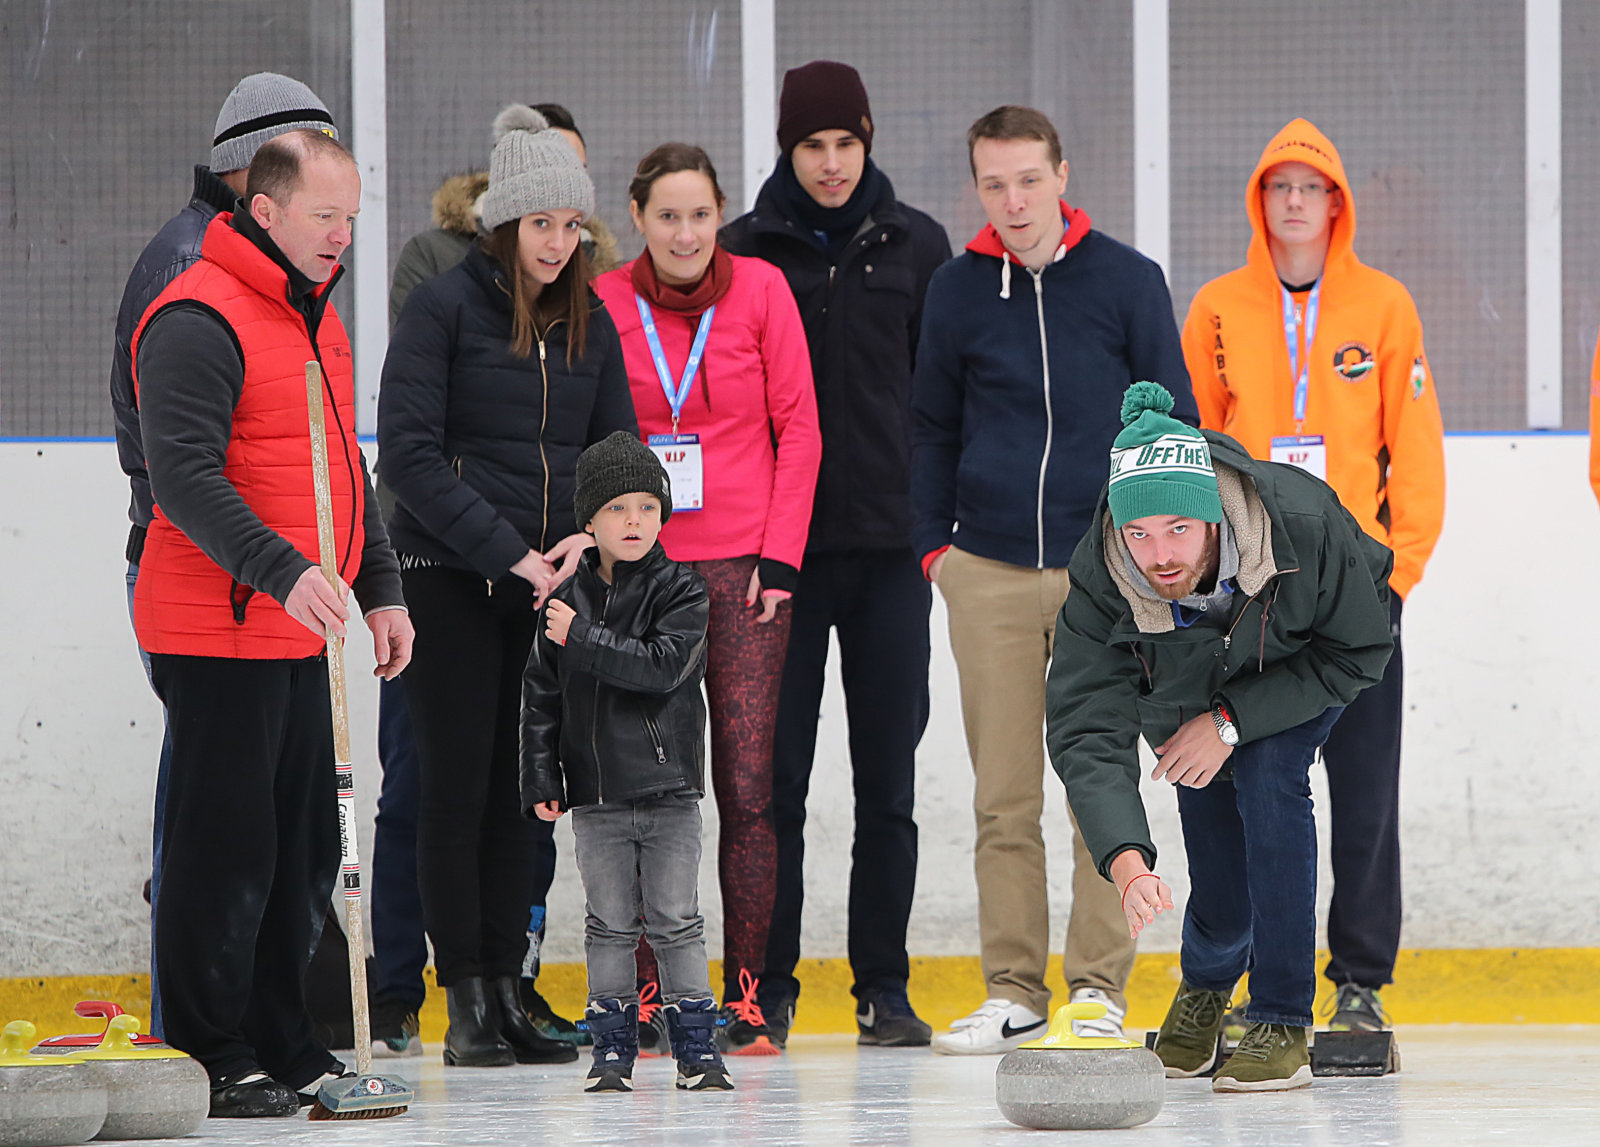 curling-sportagvalaszto-2019.JPG